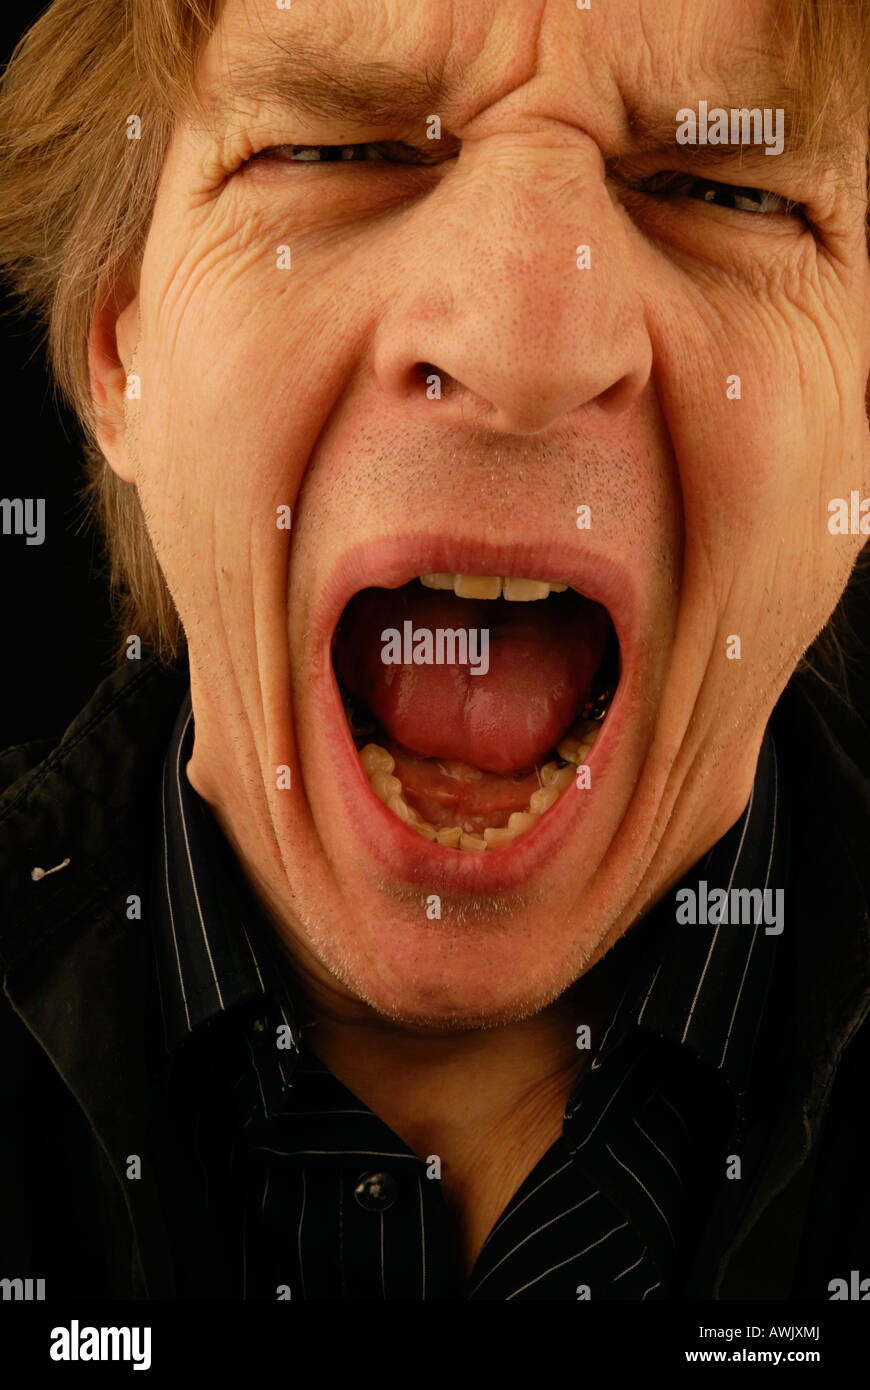 Urlo. No. 2 - Uomo urlando, odio, rabbia, adulto, forte. Foto Stock